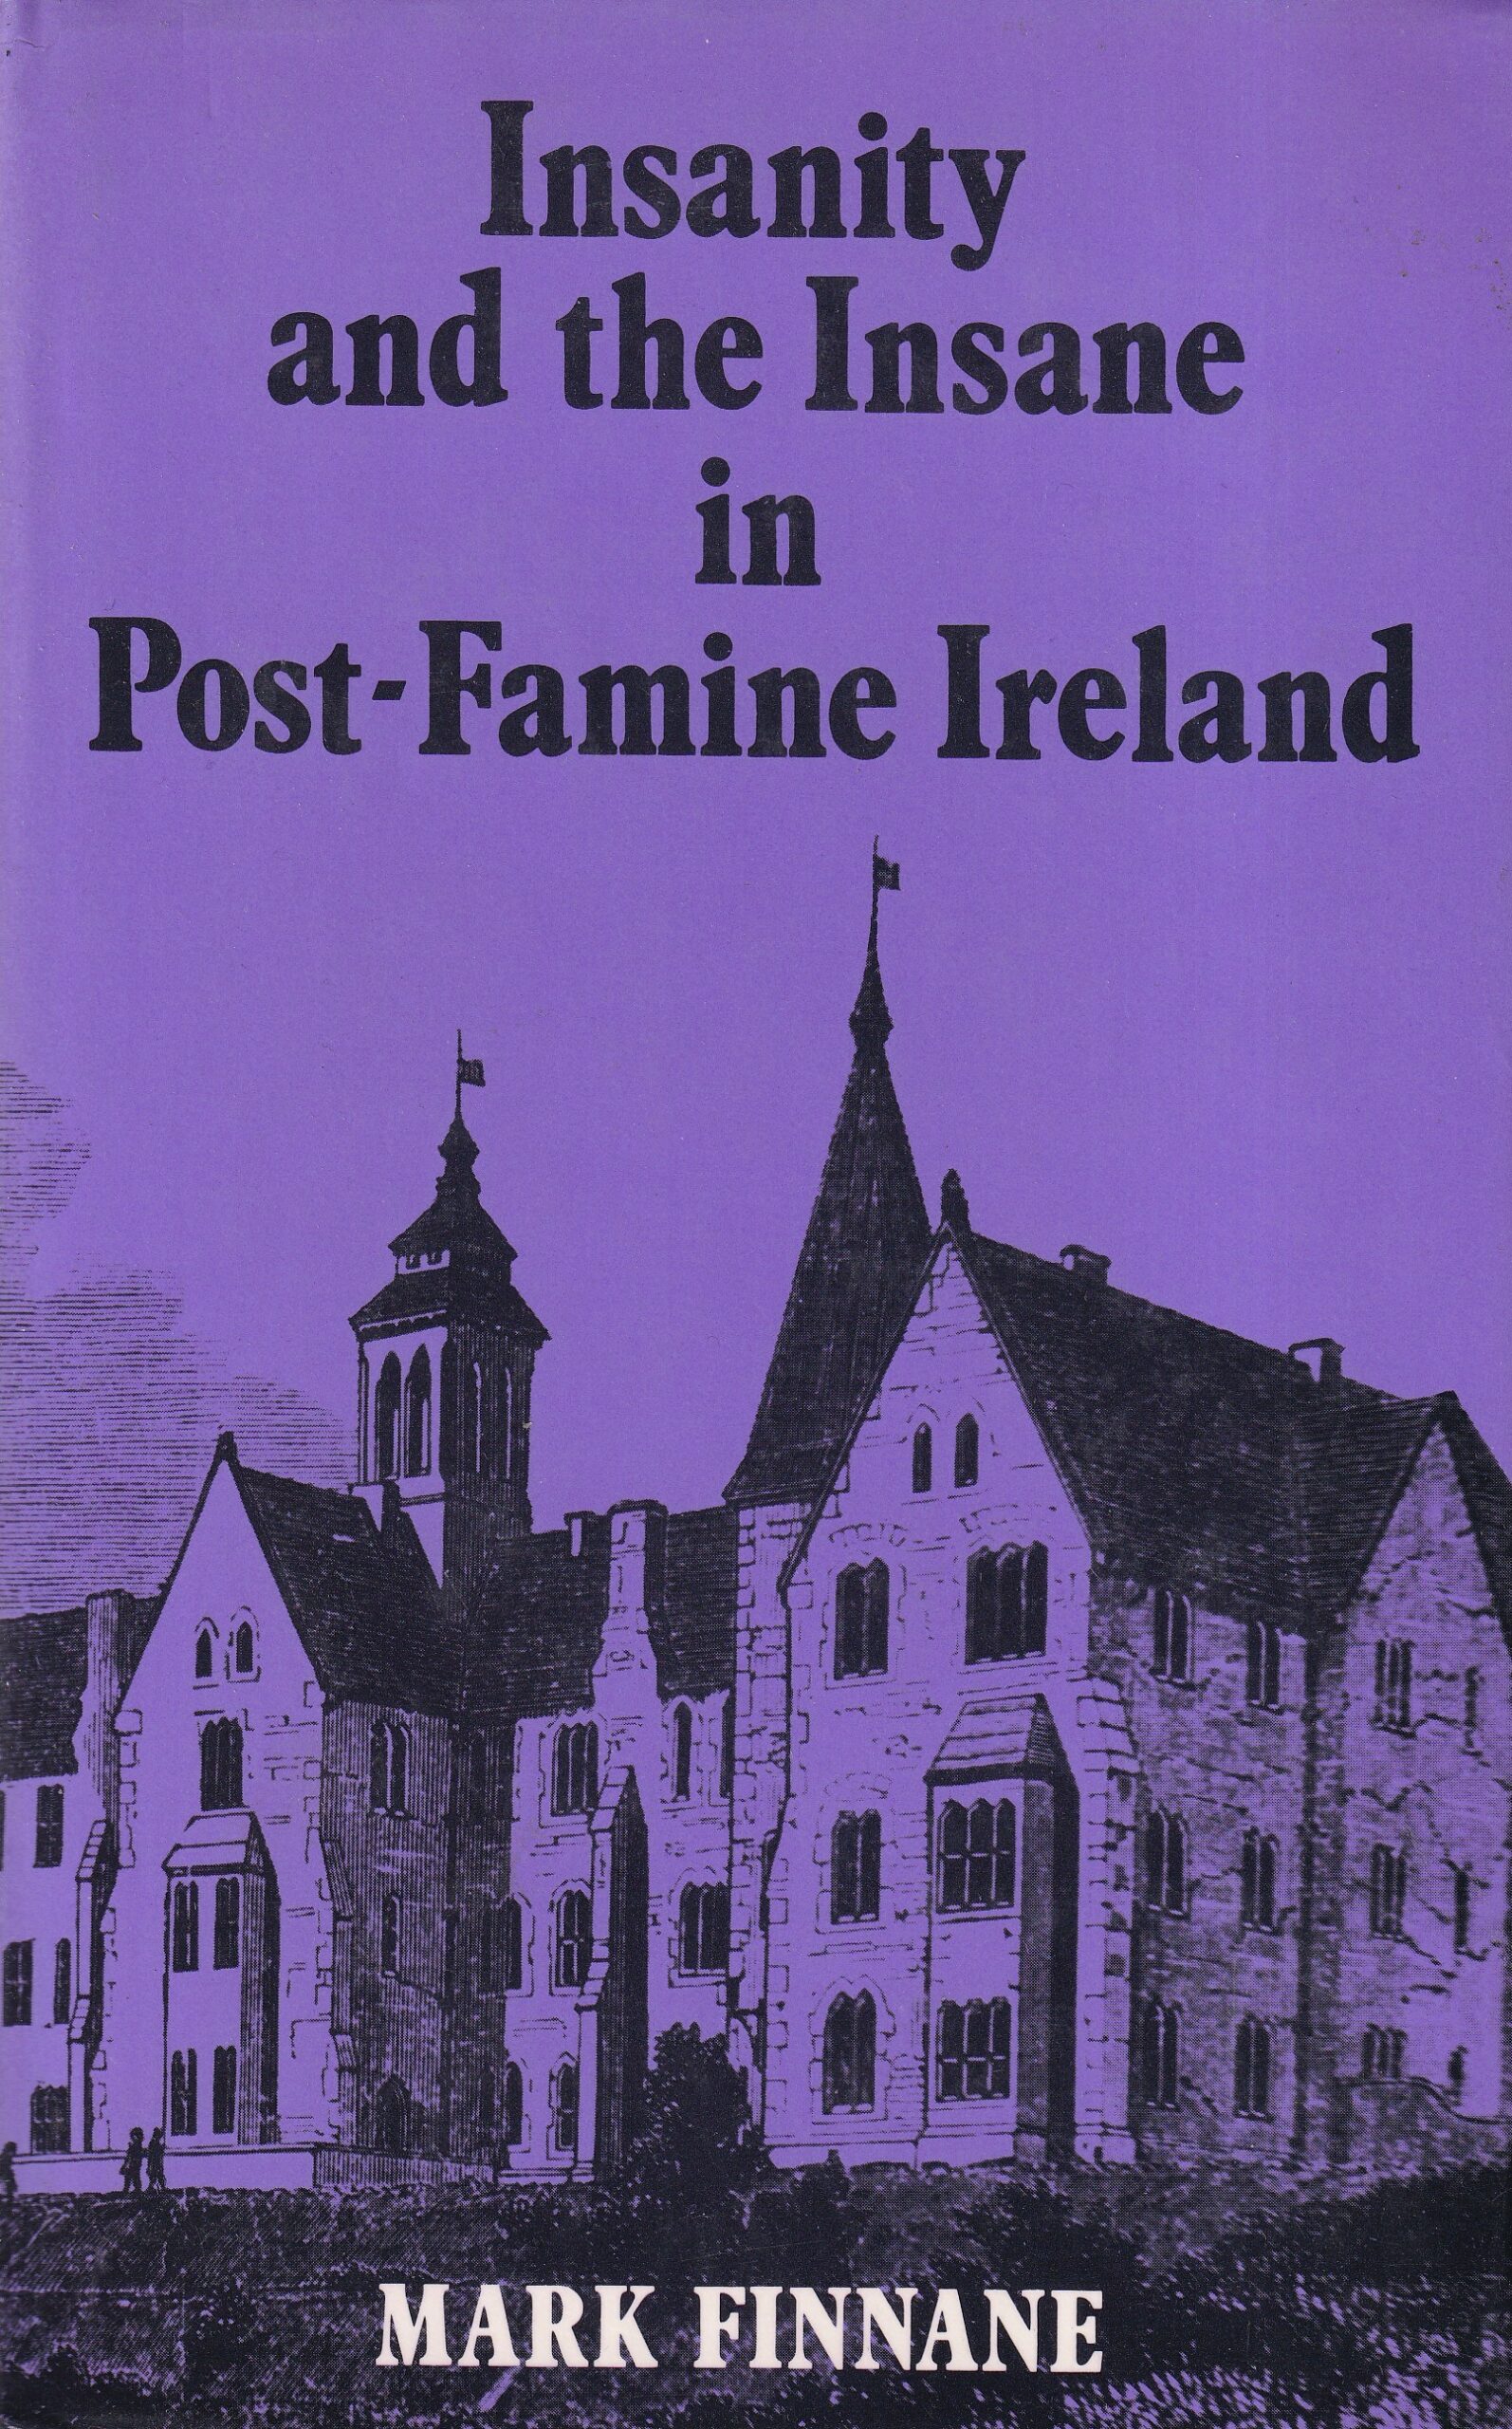 Insanity and the Insane in Post-Famine Ireland | Mark Finnane | Charlie Byrne's